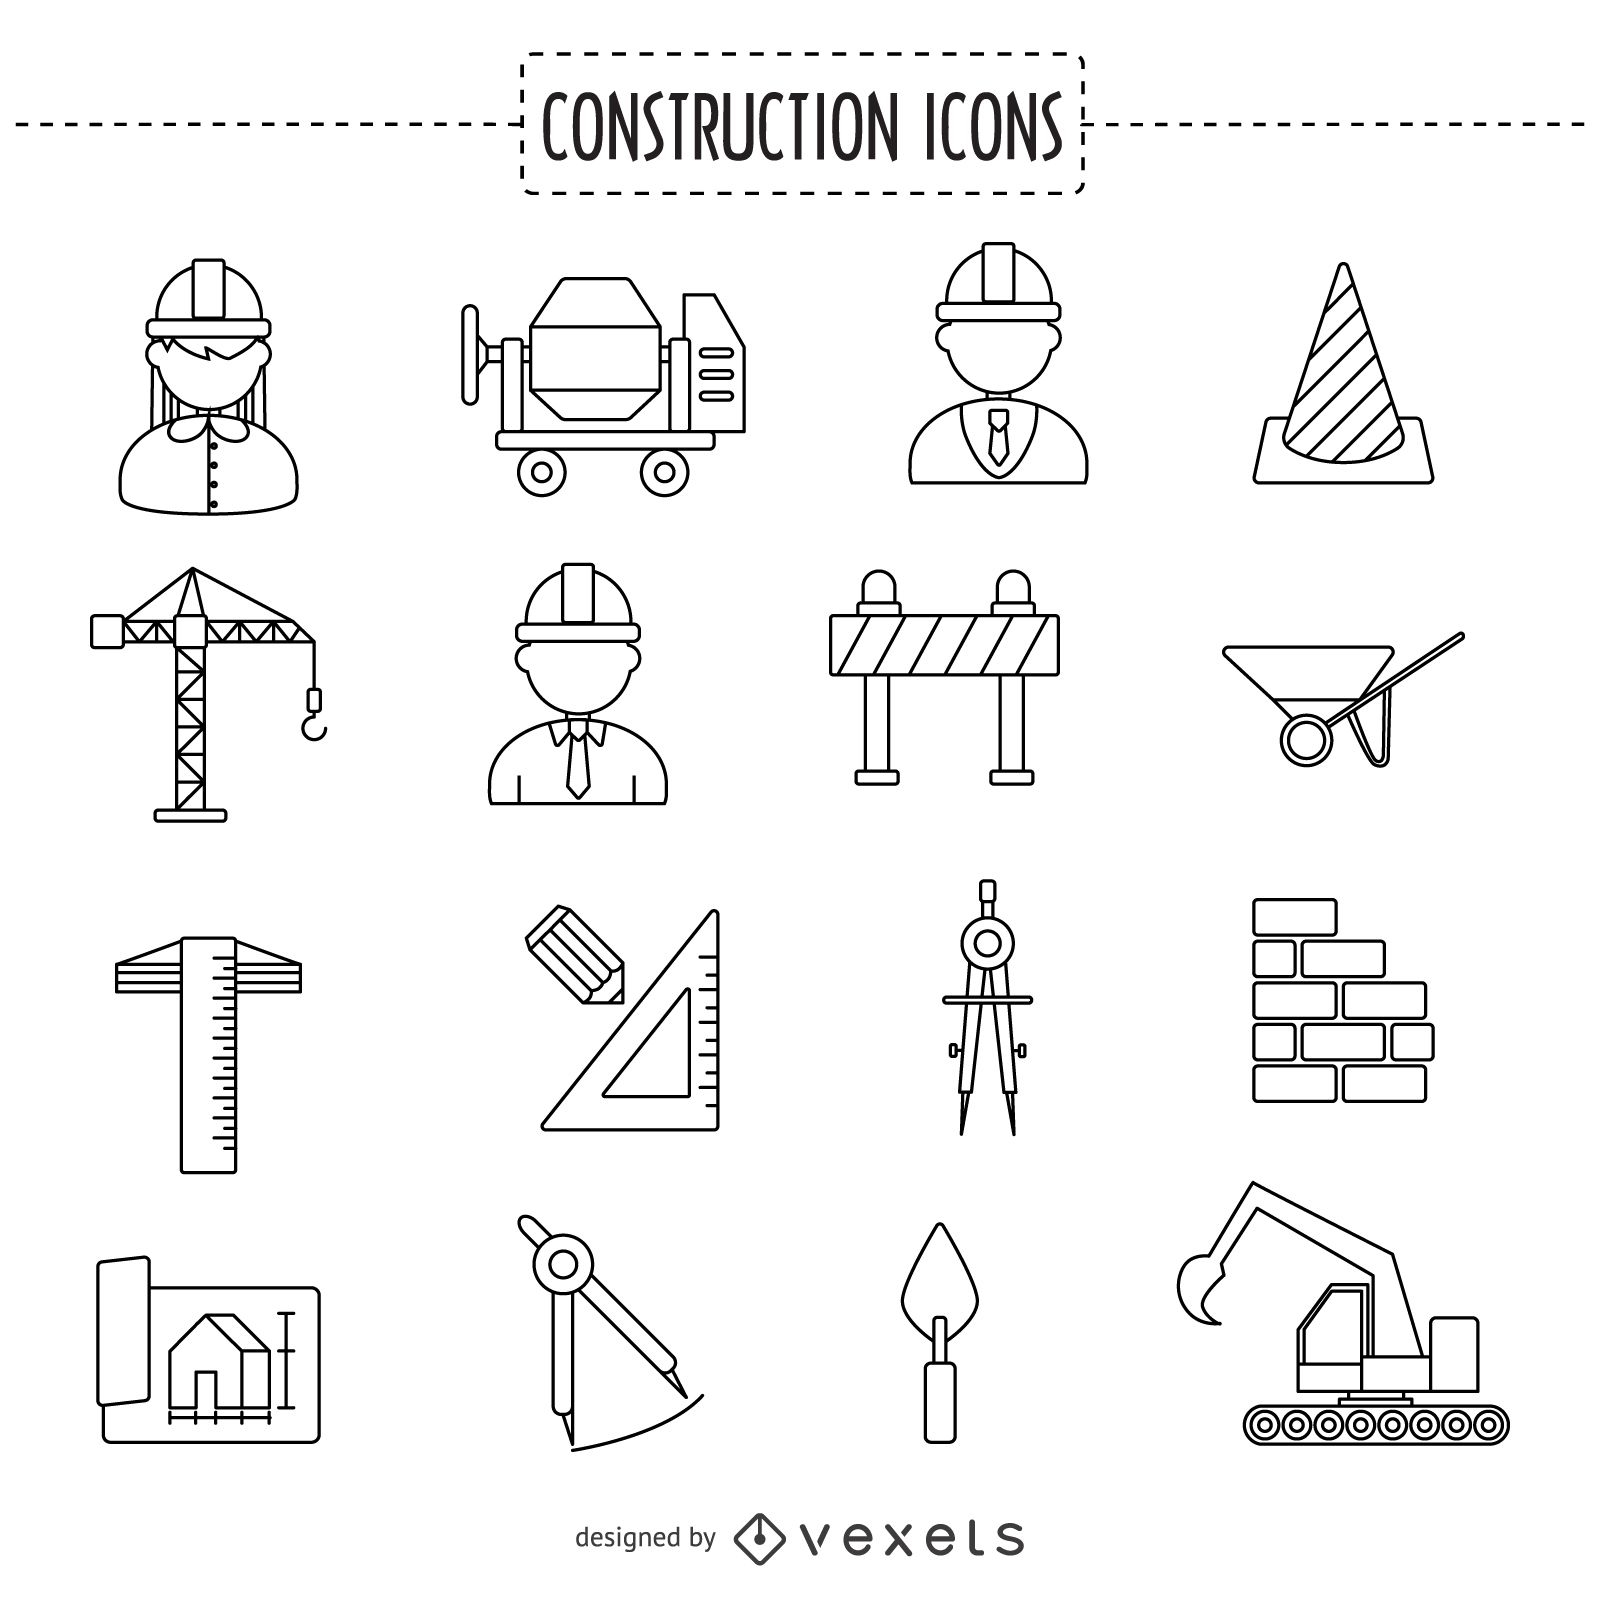 Construction stoke icon collection